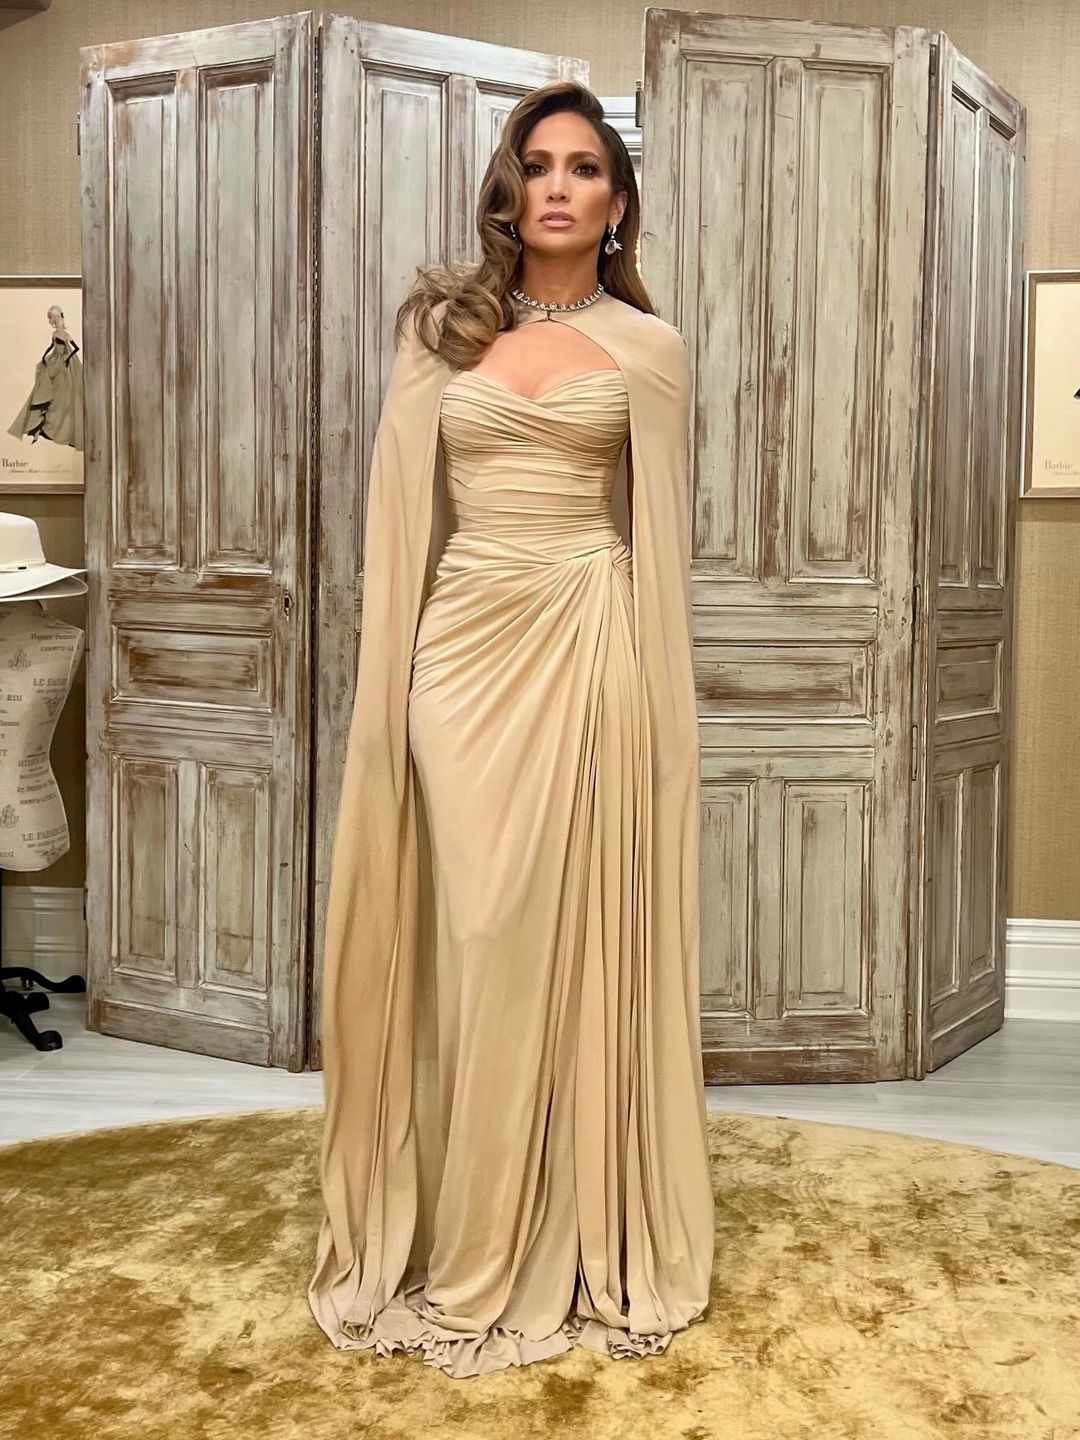 Jennifer Lopez wears a beige gown and cape look on her Instagram